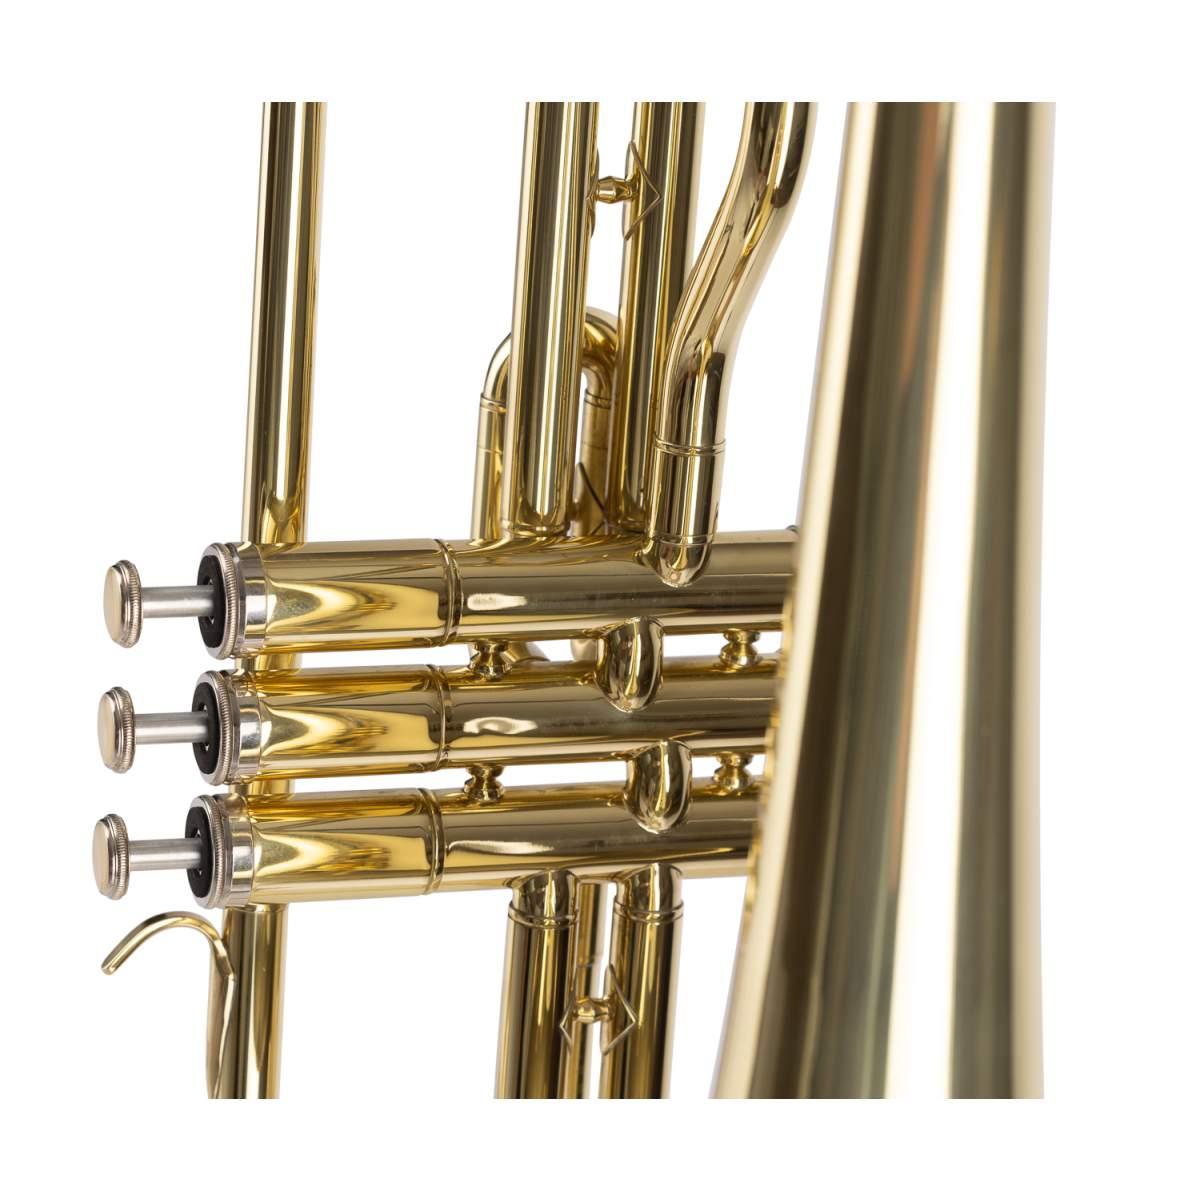 Amadeus TRB400 trombone a pistoni